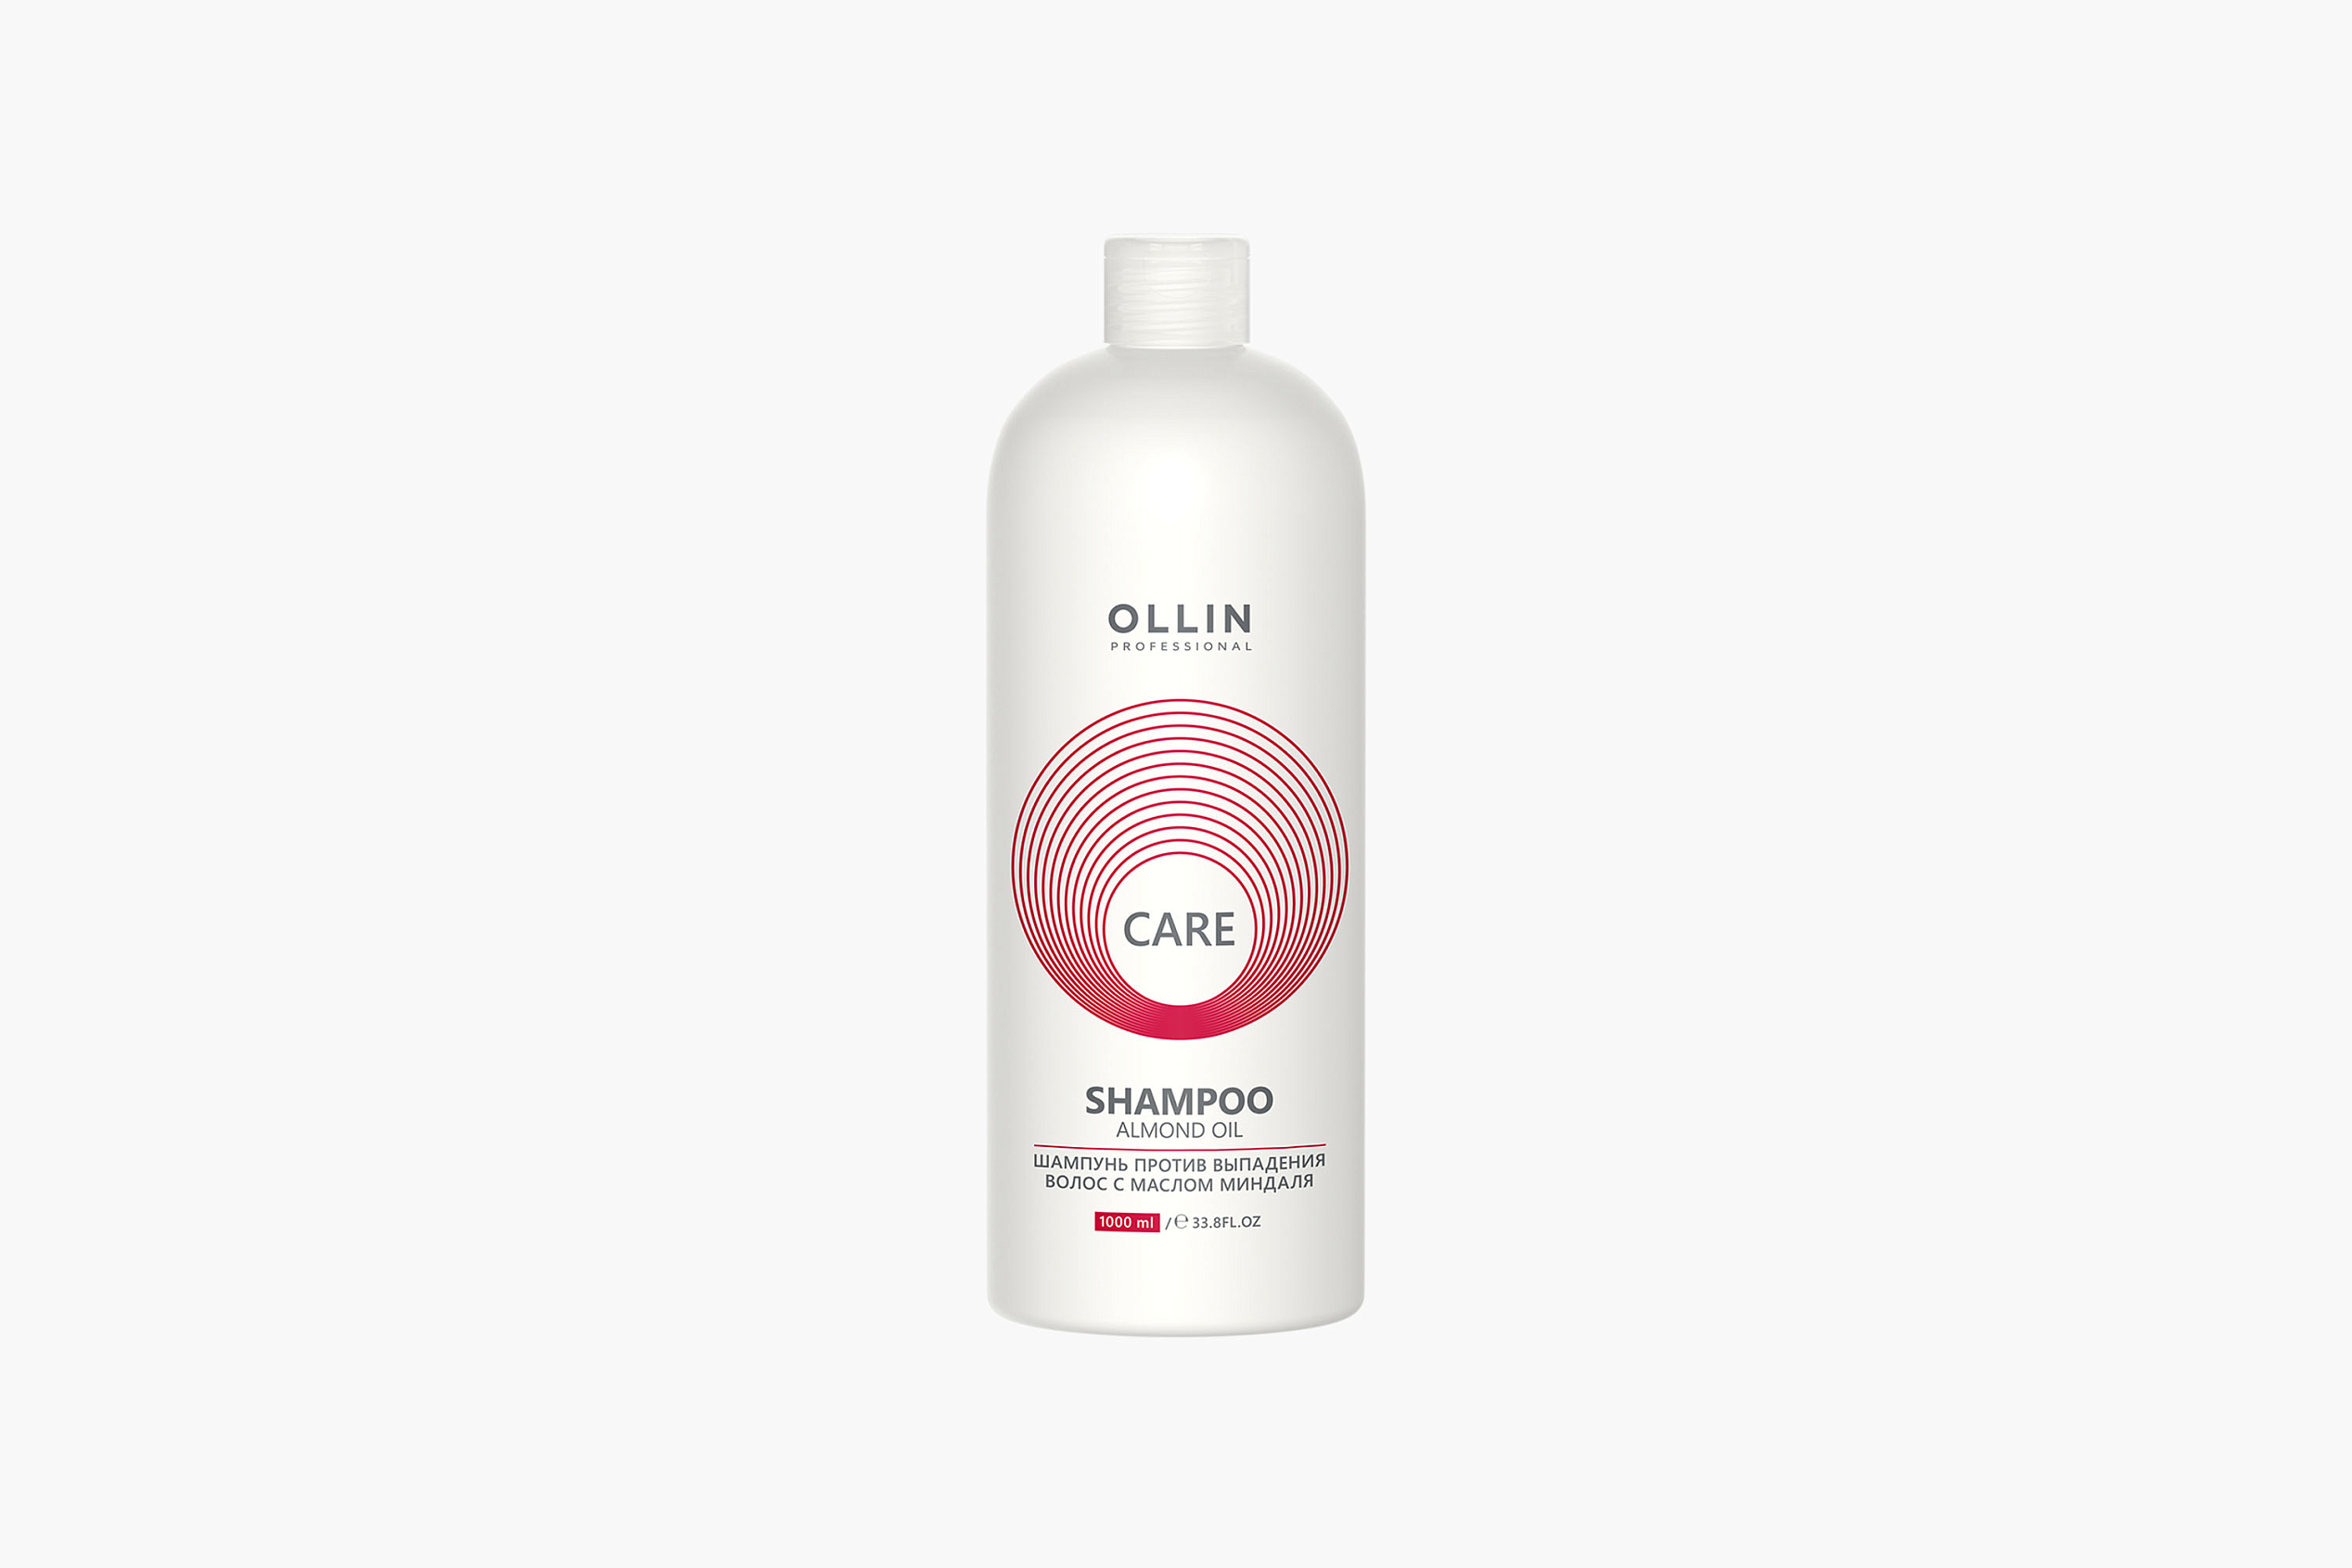 Ollin Professional Care Almond Oil Shampoo фото 1